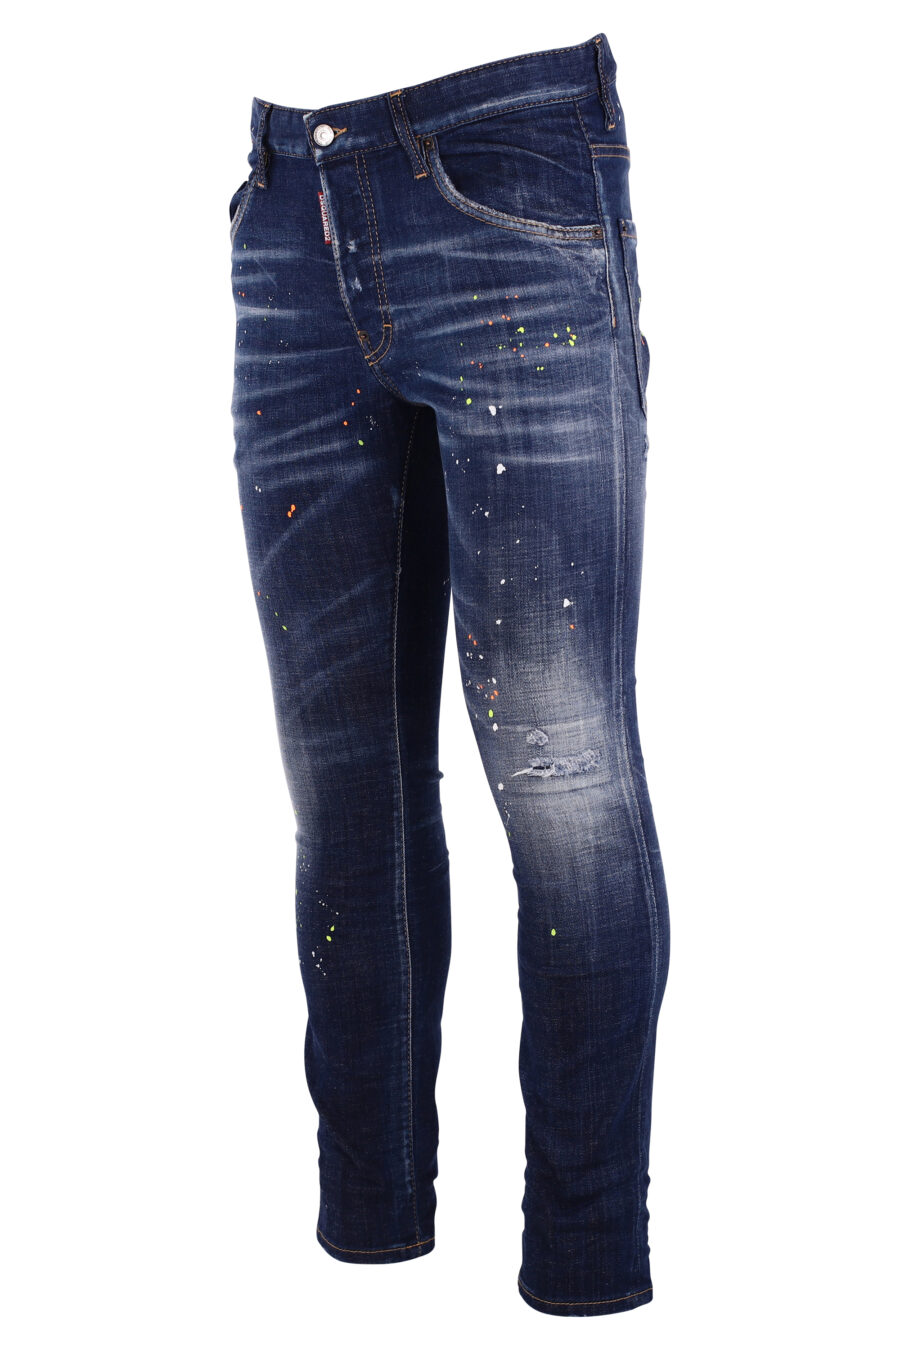 Jeans "skater jean" blue with white paint splash - IMG 8994